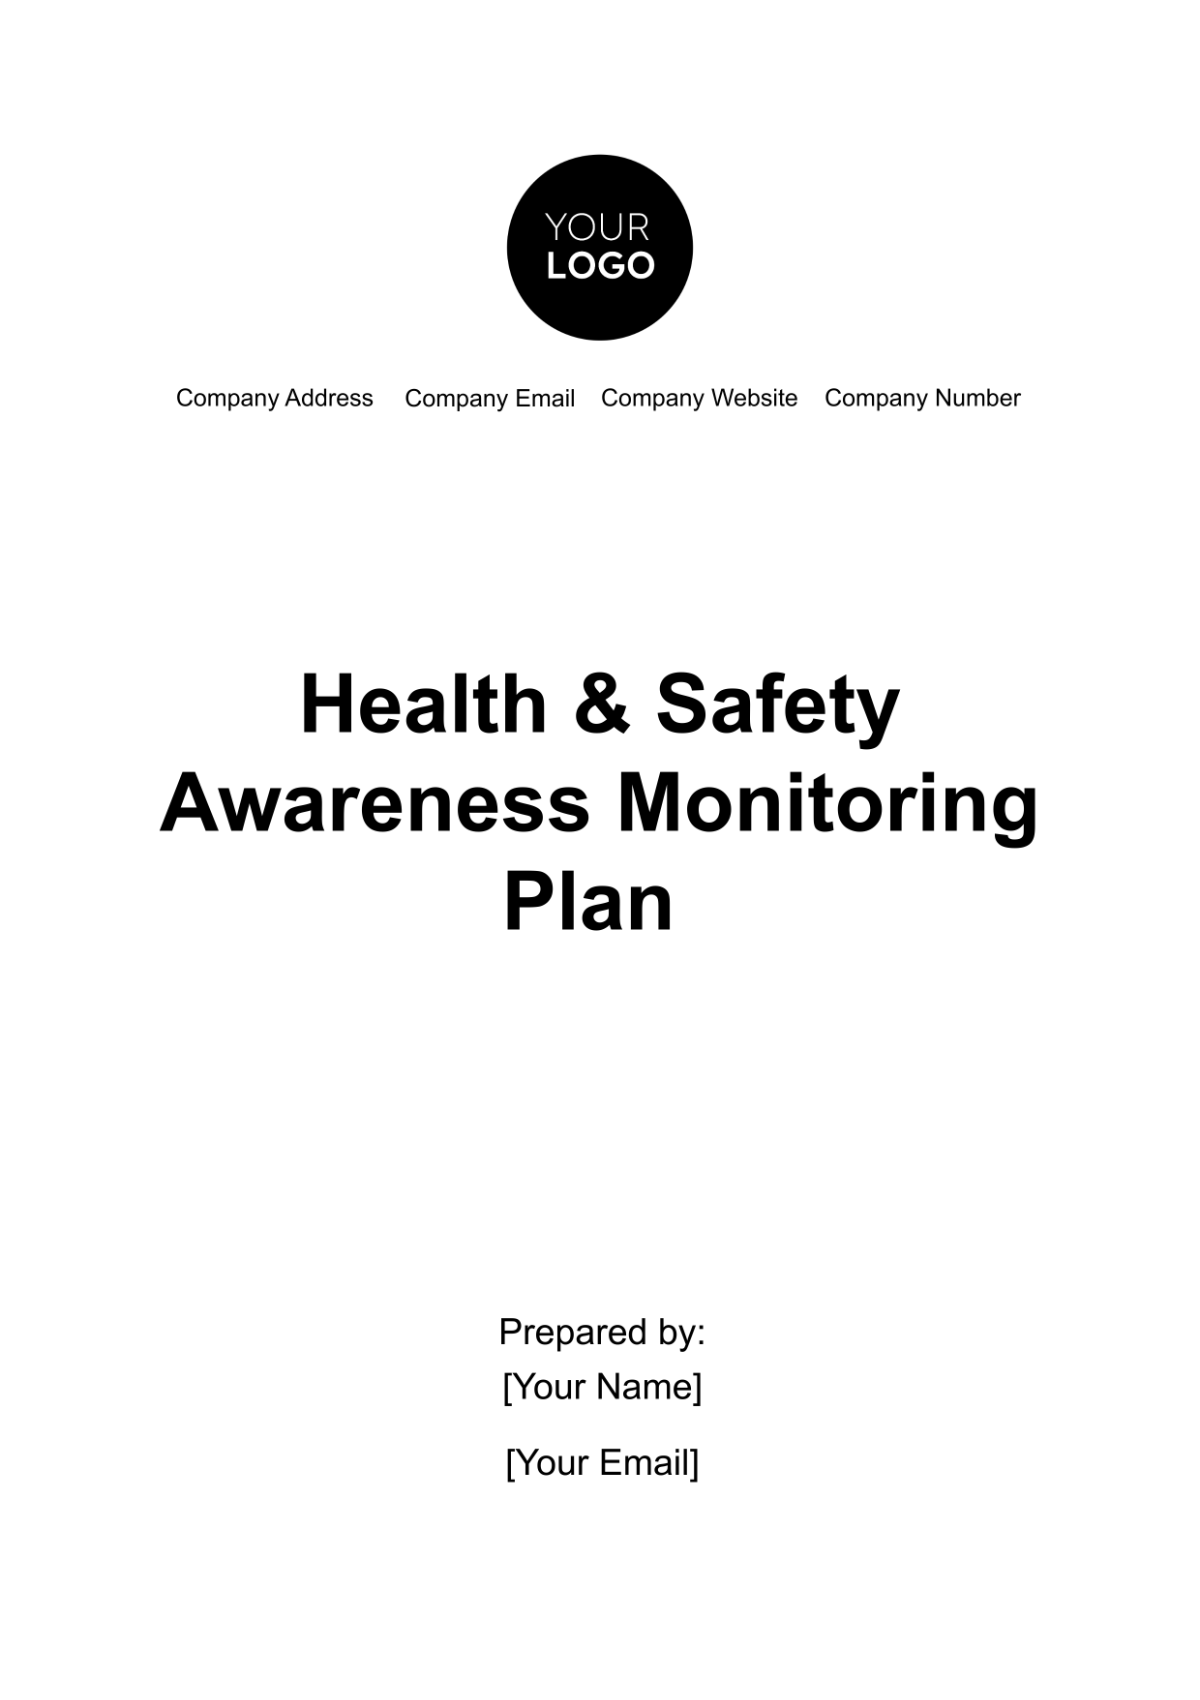 Health & Safety Awareness Monitoring Plan Template